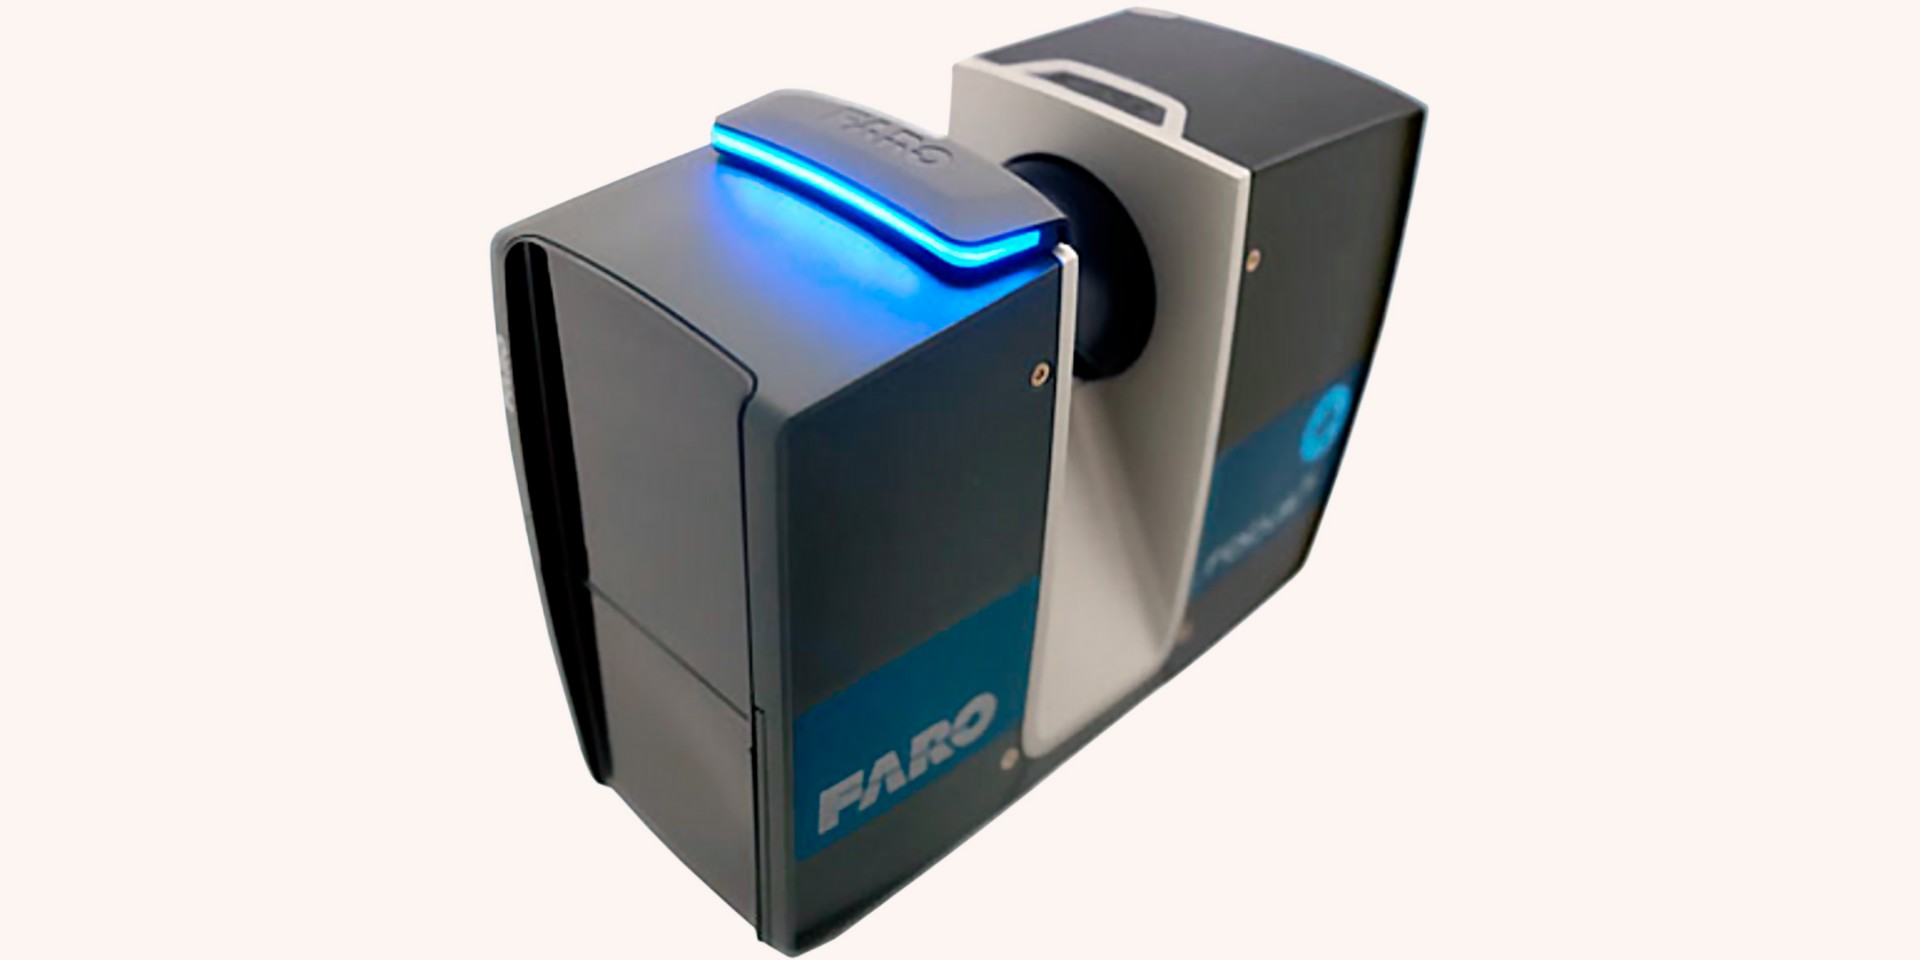 Фото 3D сканер FARO Laser Scanner Focus S150 Plus